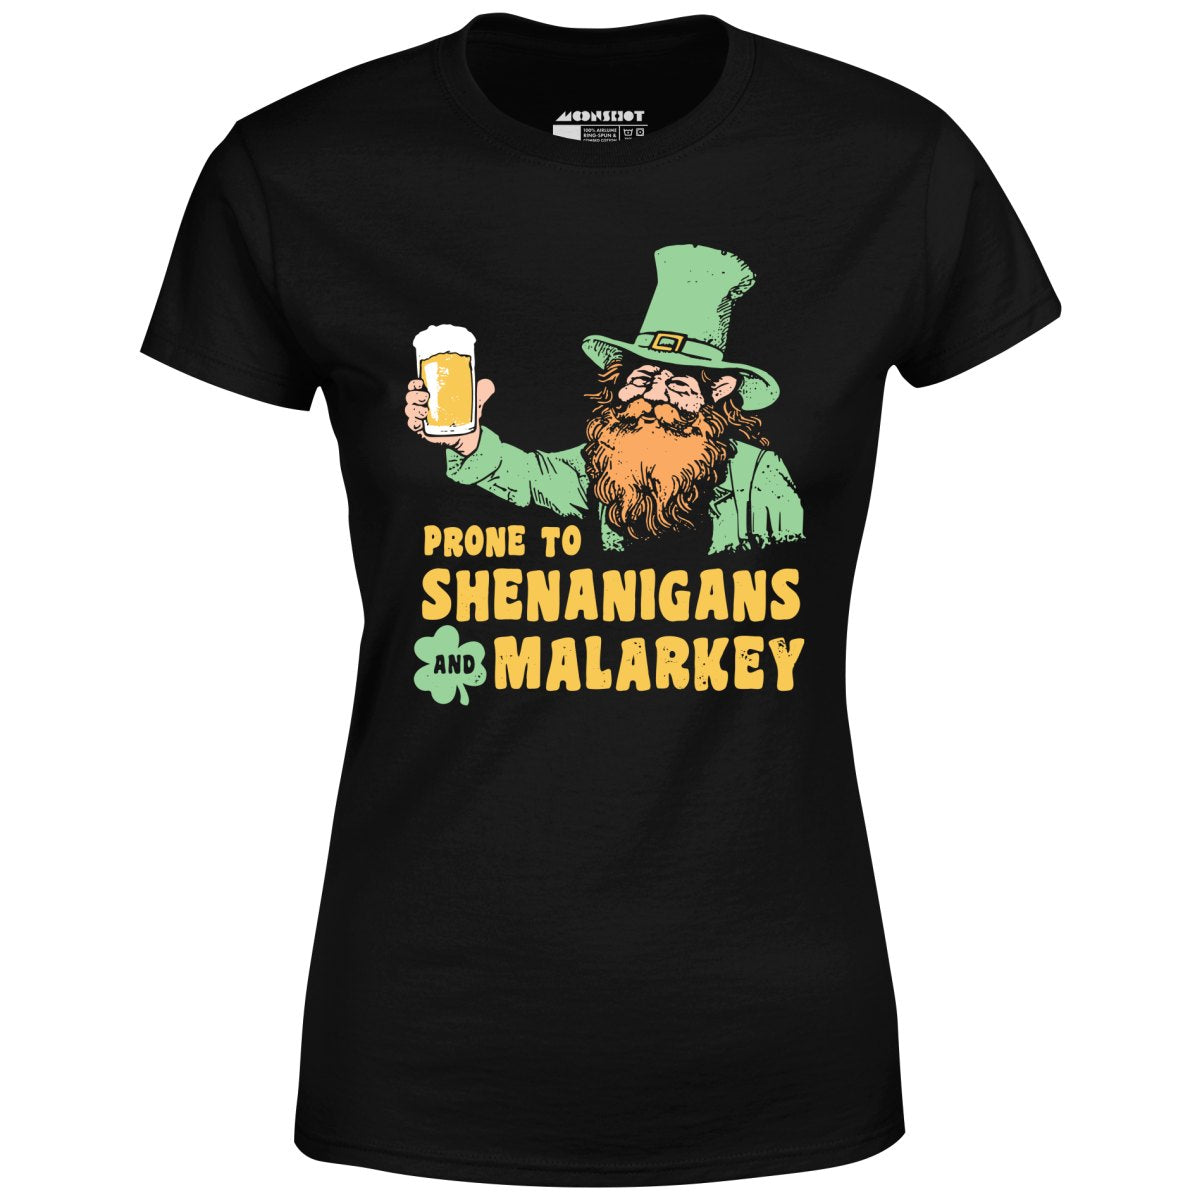 Prone to Shenanigans and Malarkey - Women's T-Shirt